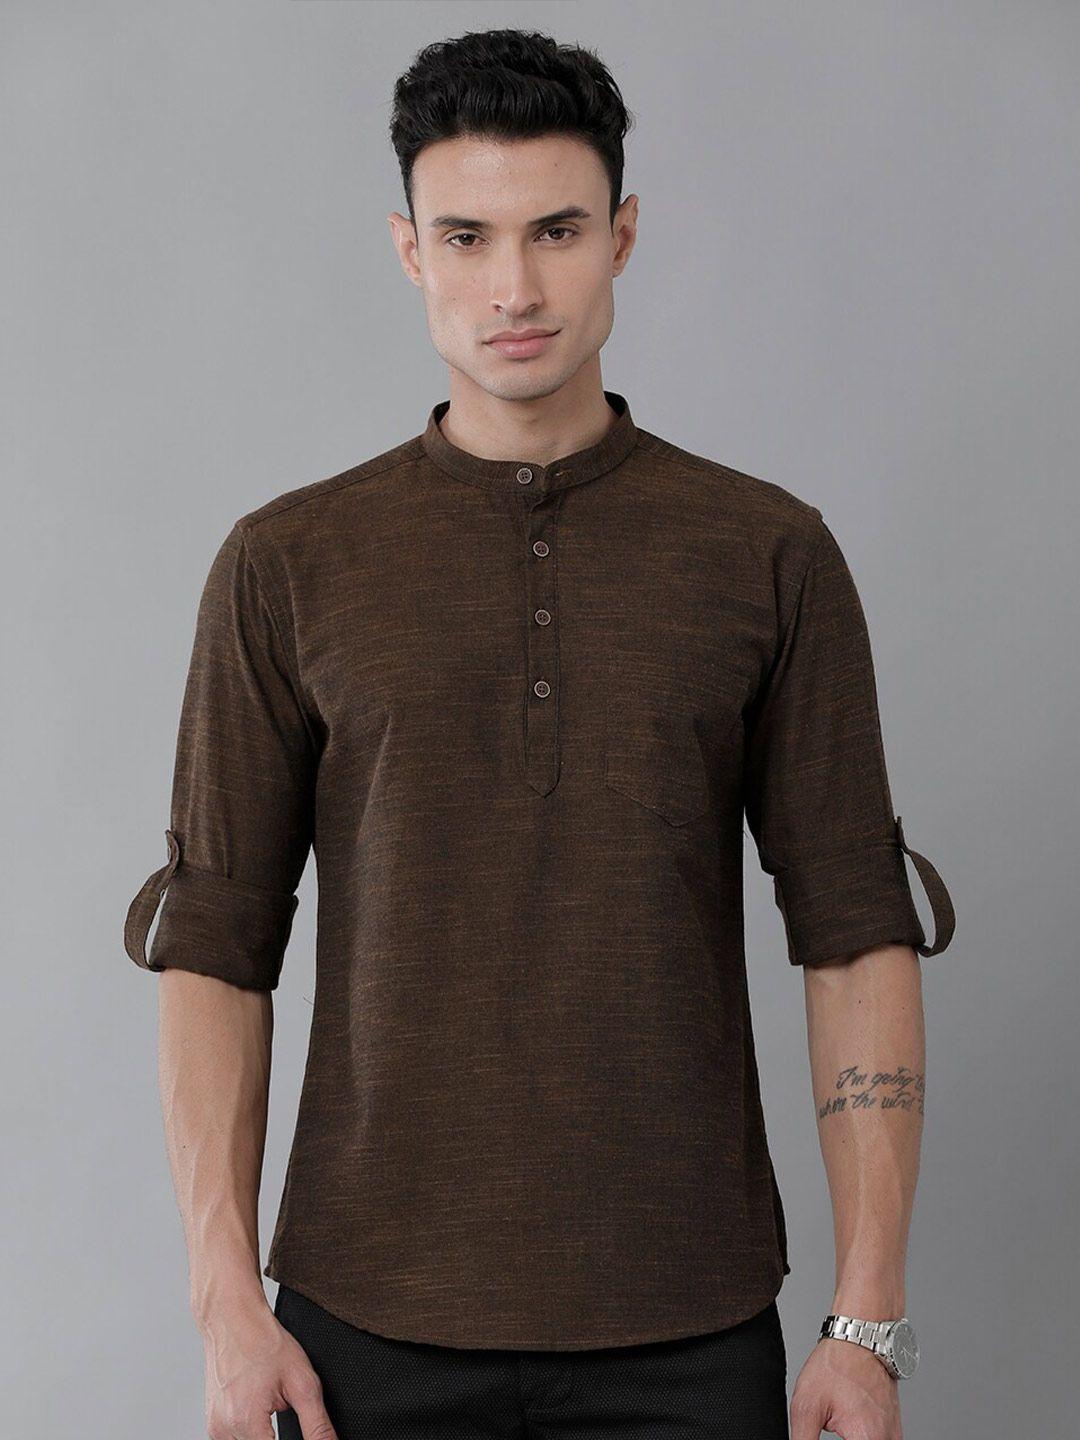 yovish mandarin collar roll-up sleeves comfort fit cotton casual shirt